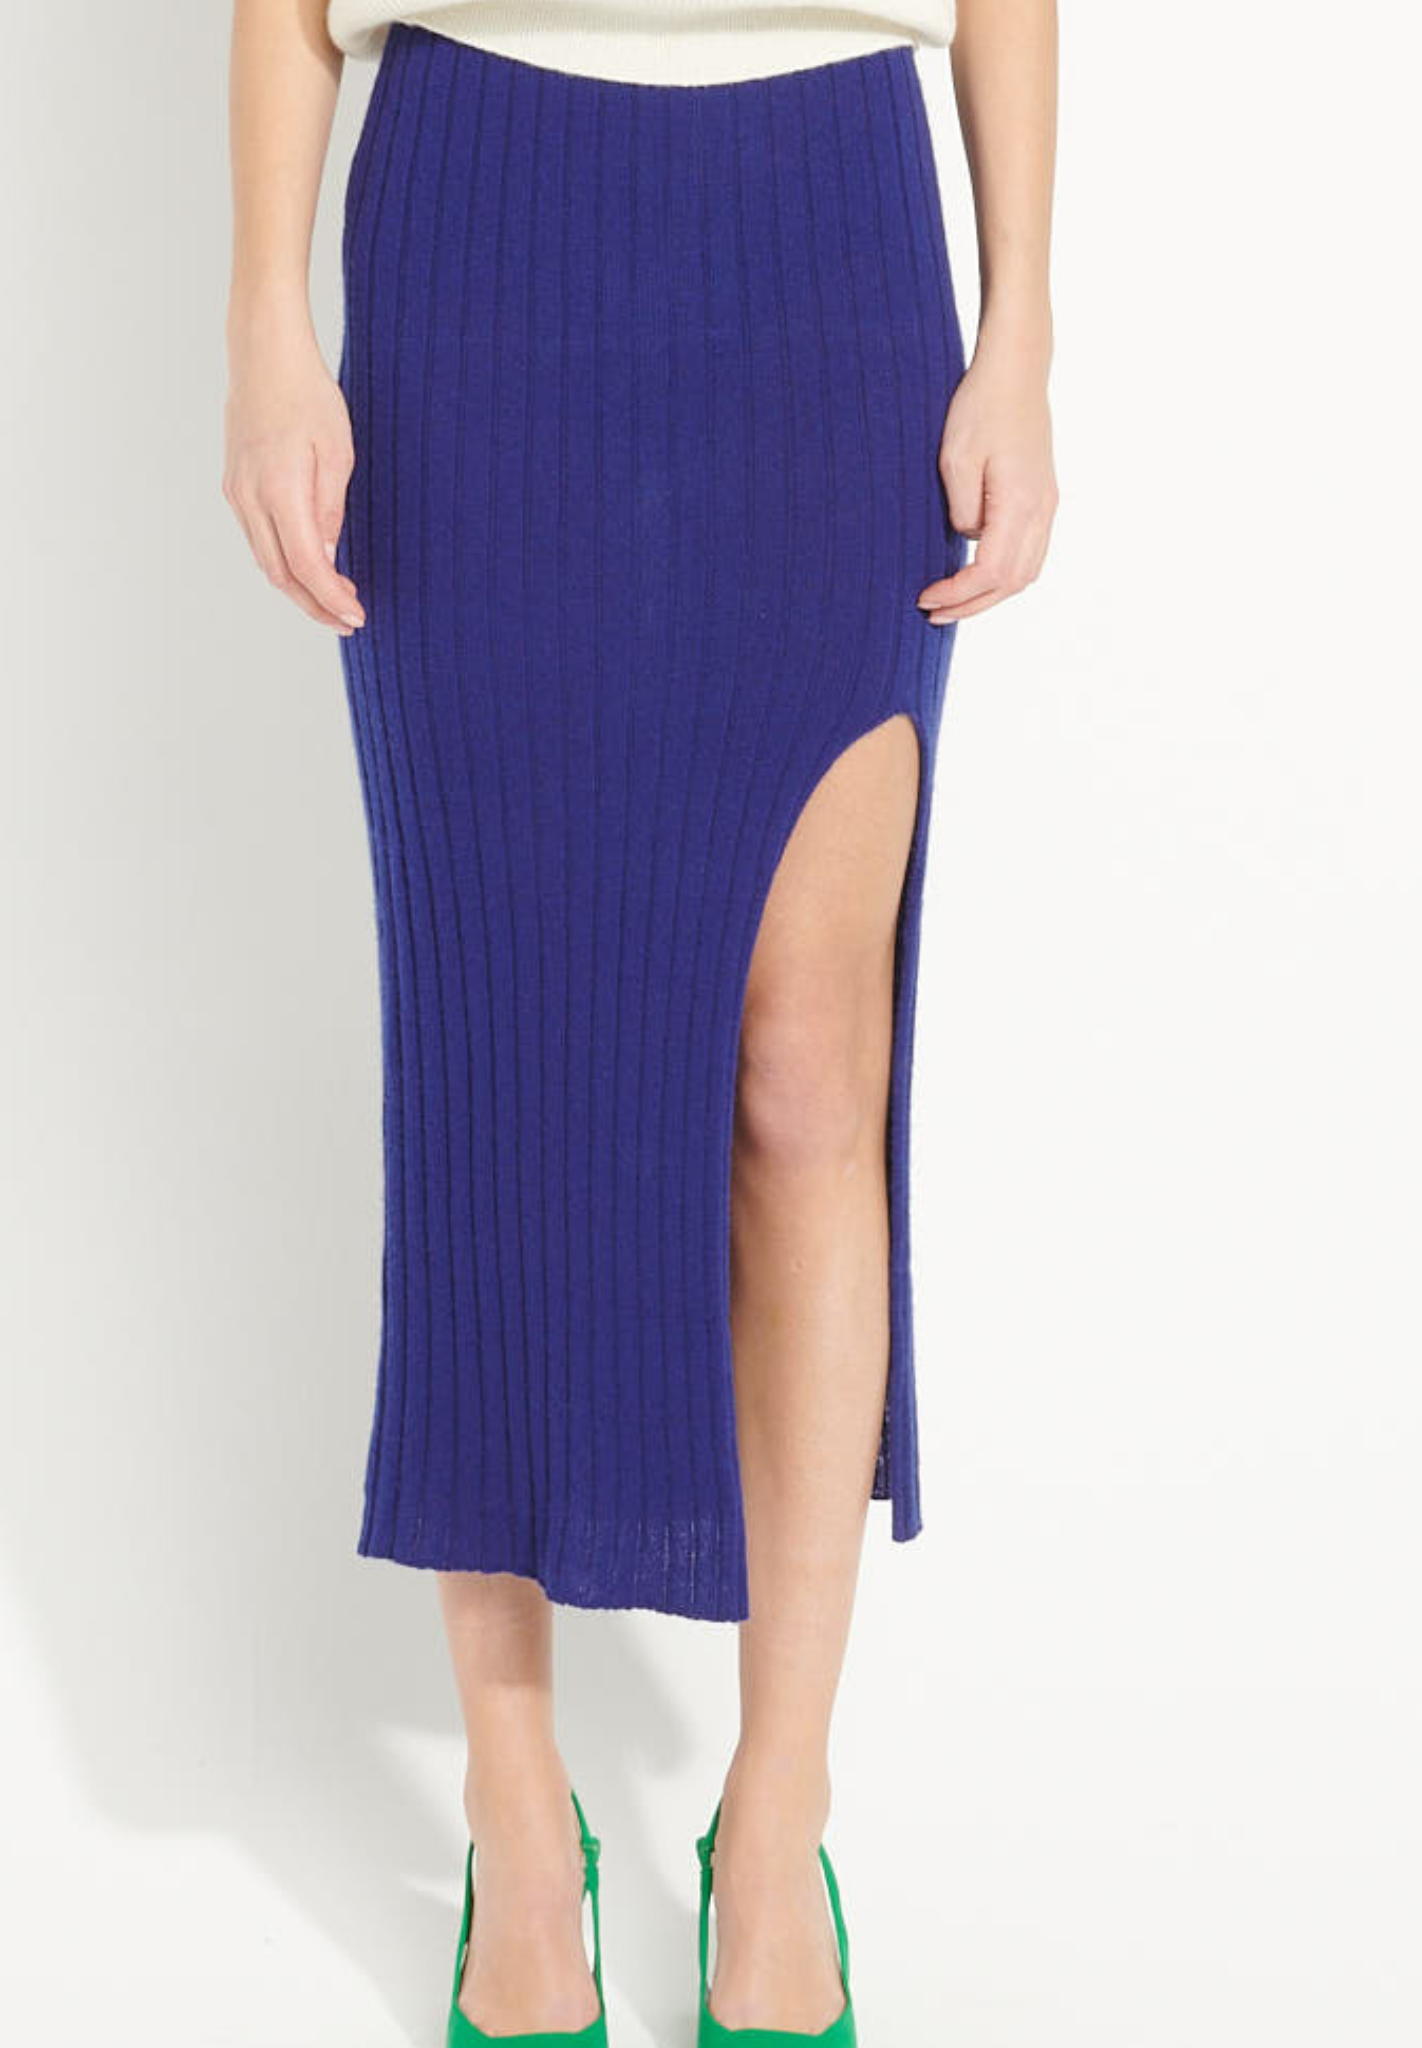 AVA 13 Long skirt in dark blue cashmere with slit